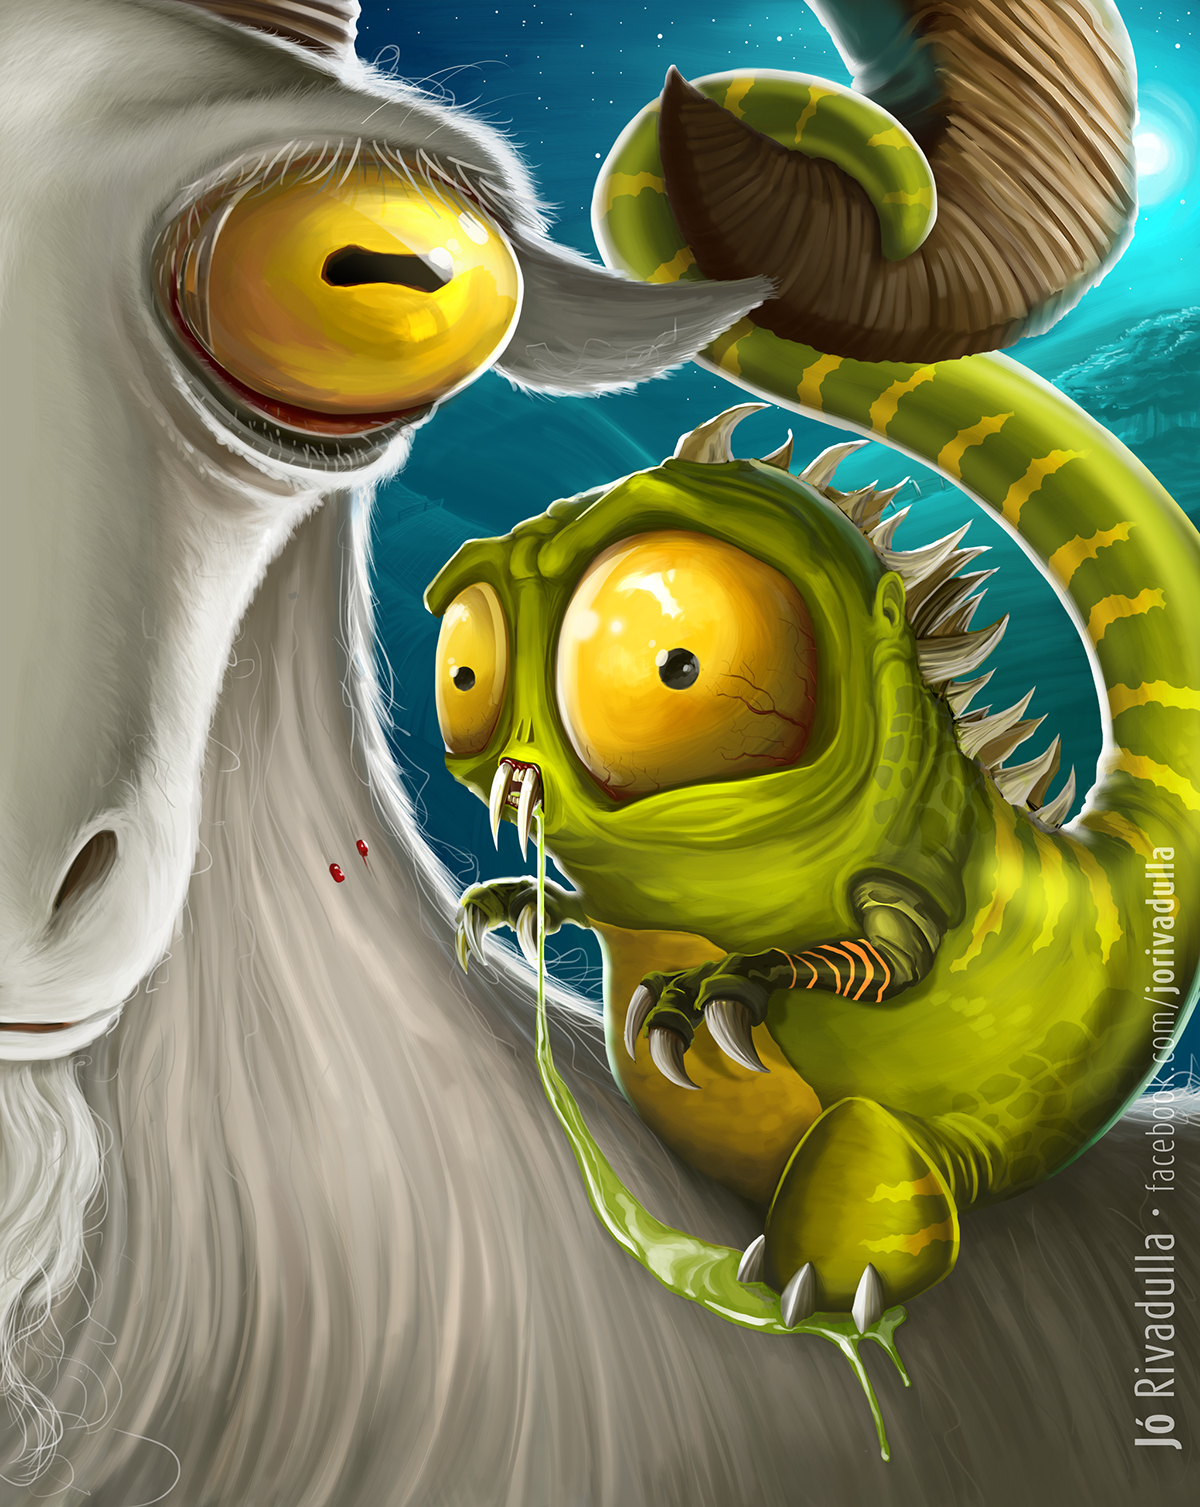 Monstruos ilustracion Rivadulla Libro Infantil dracula hombre lobo medusa Werewolf hidra ogro